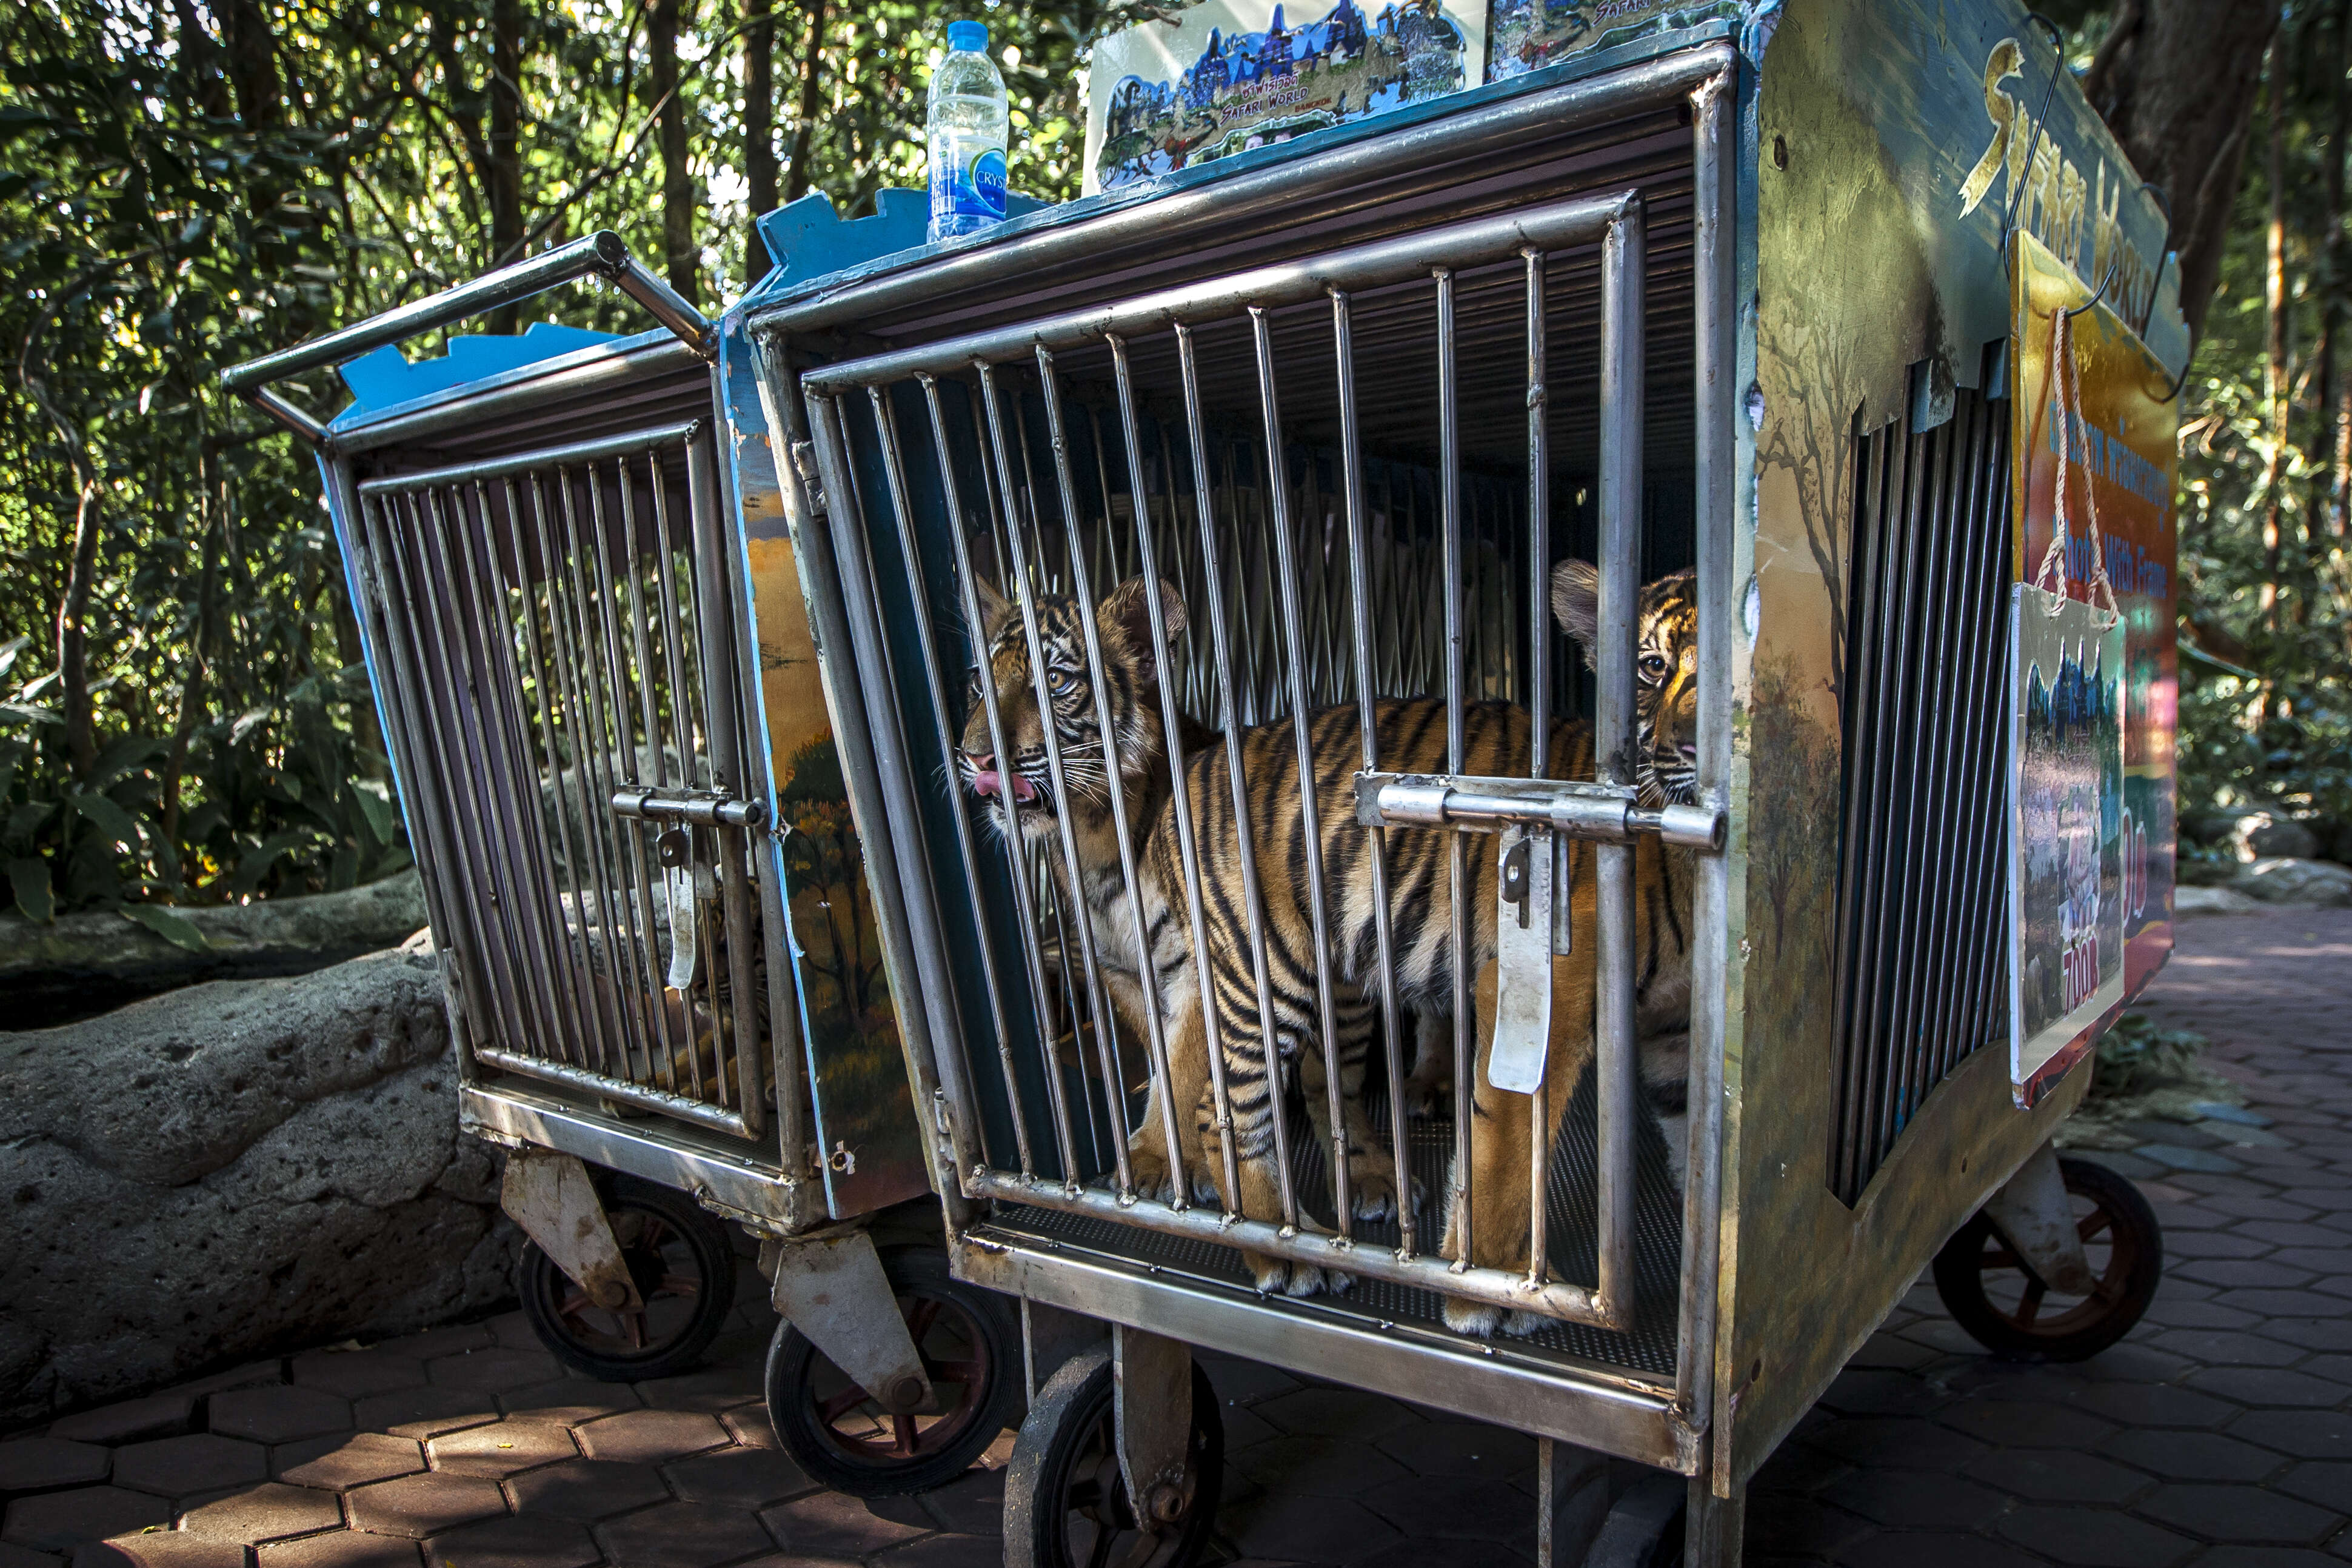 Tiger cubs kept inside tiny cages